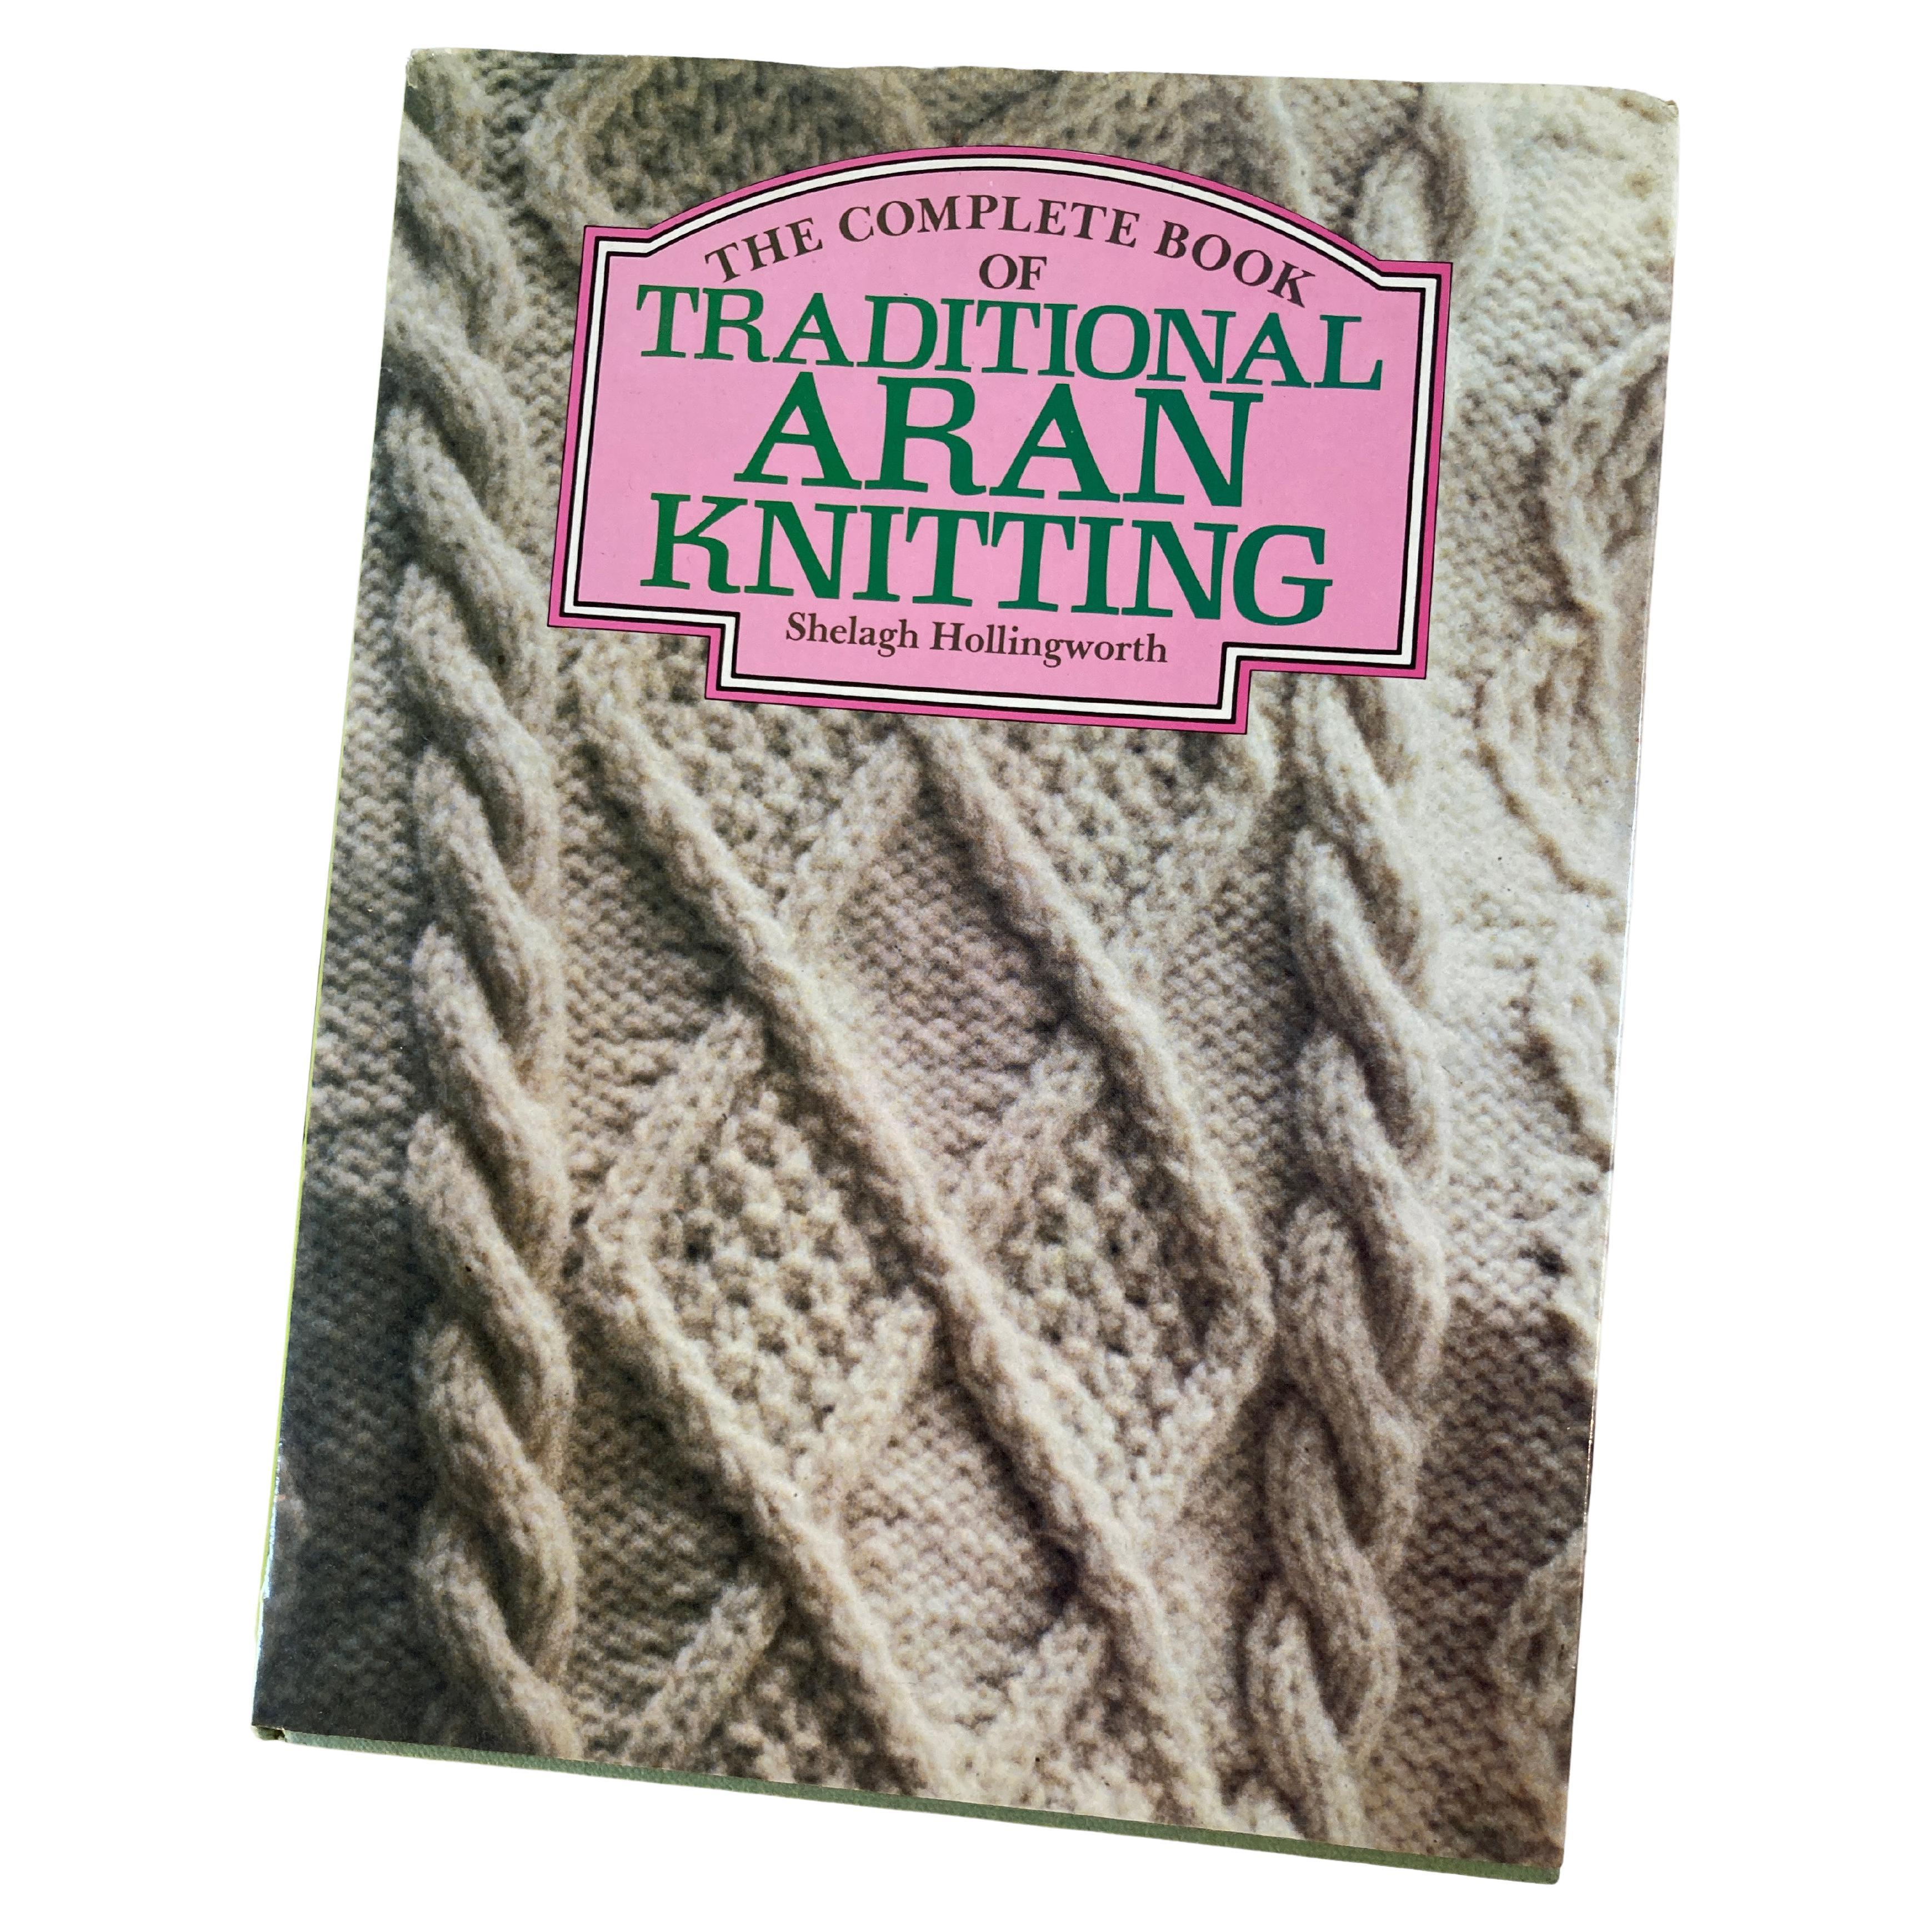 Komplettes Buch über traditionelle Aran-Knitting von Shelagh Hollingworth, 1982